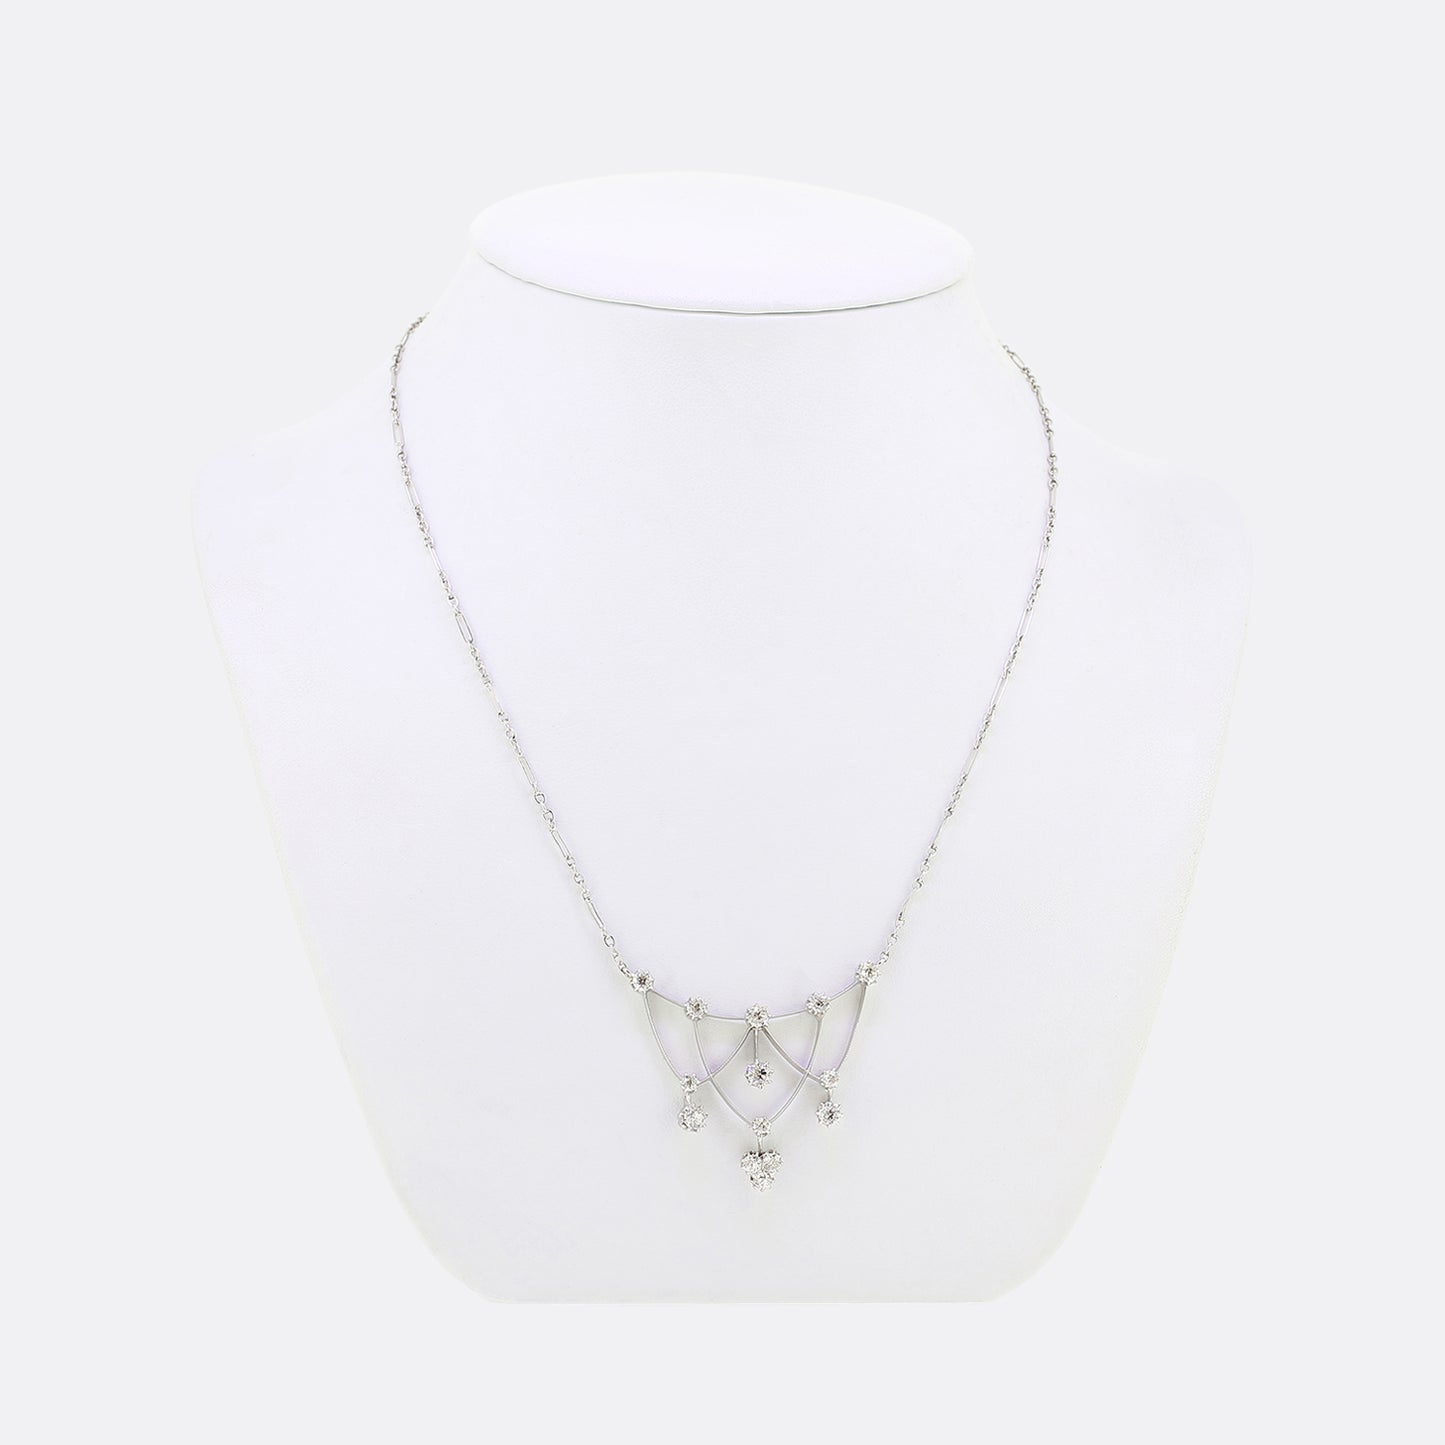 Antique Old Cut Diamond Pendant Necklace